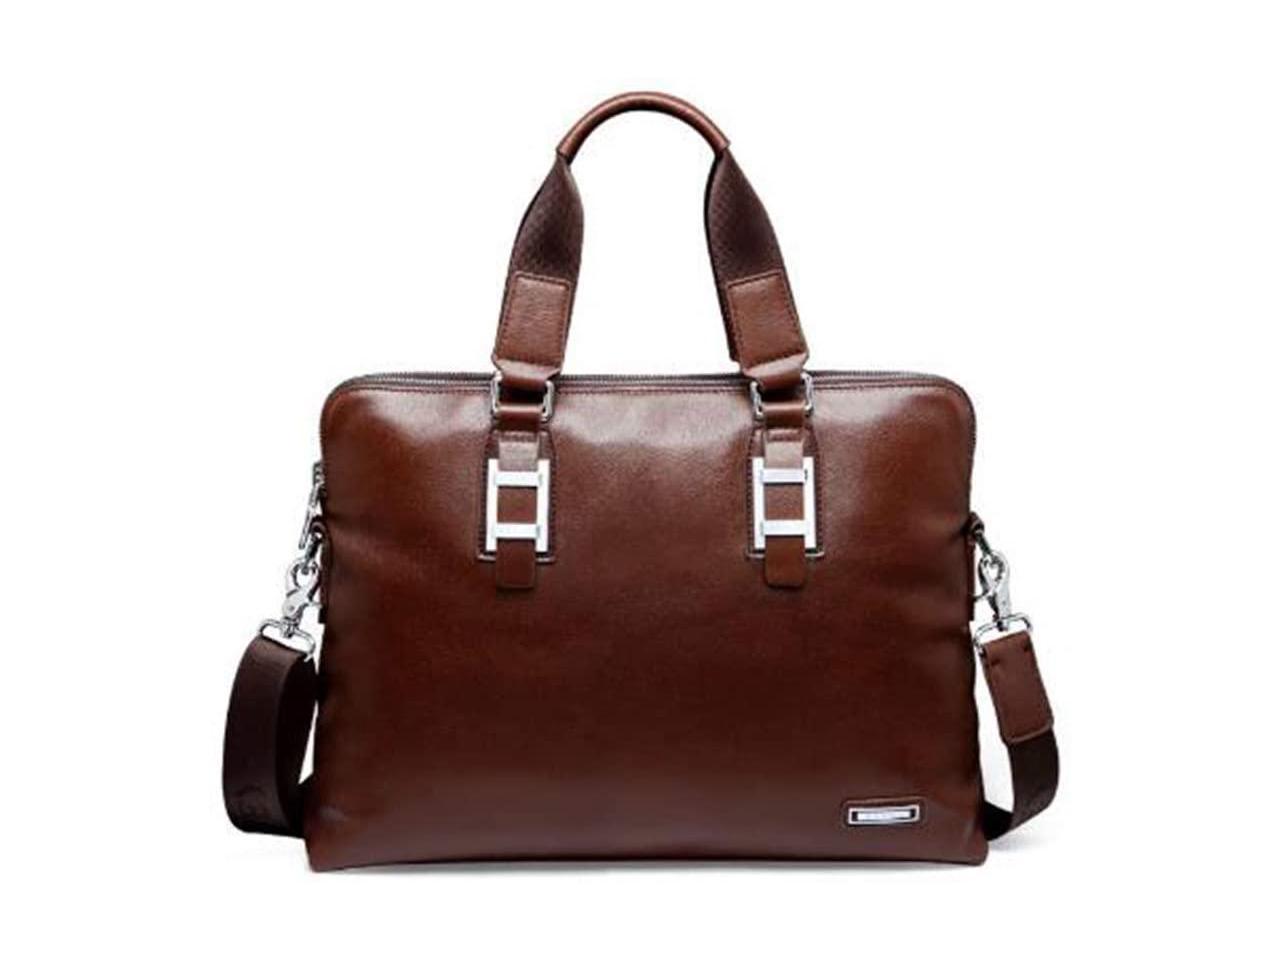 ZYSXJMY Leather Briefcase for Men Computer Bag Laptop Bag 